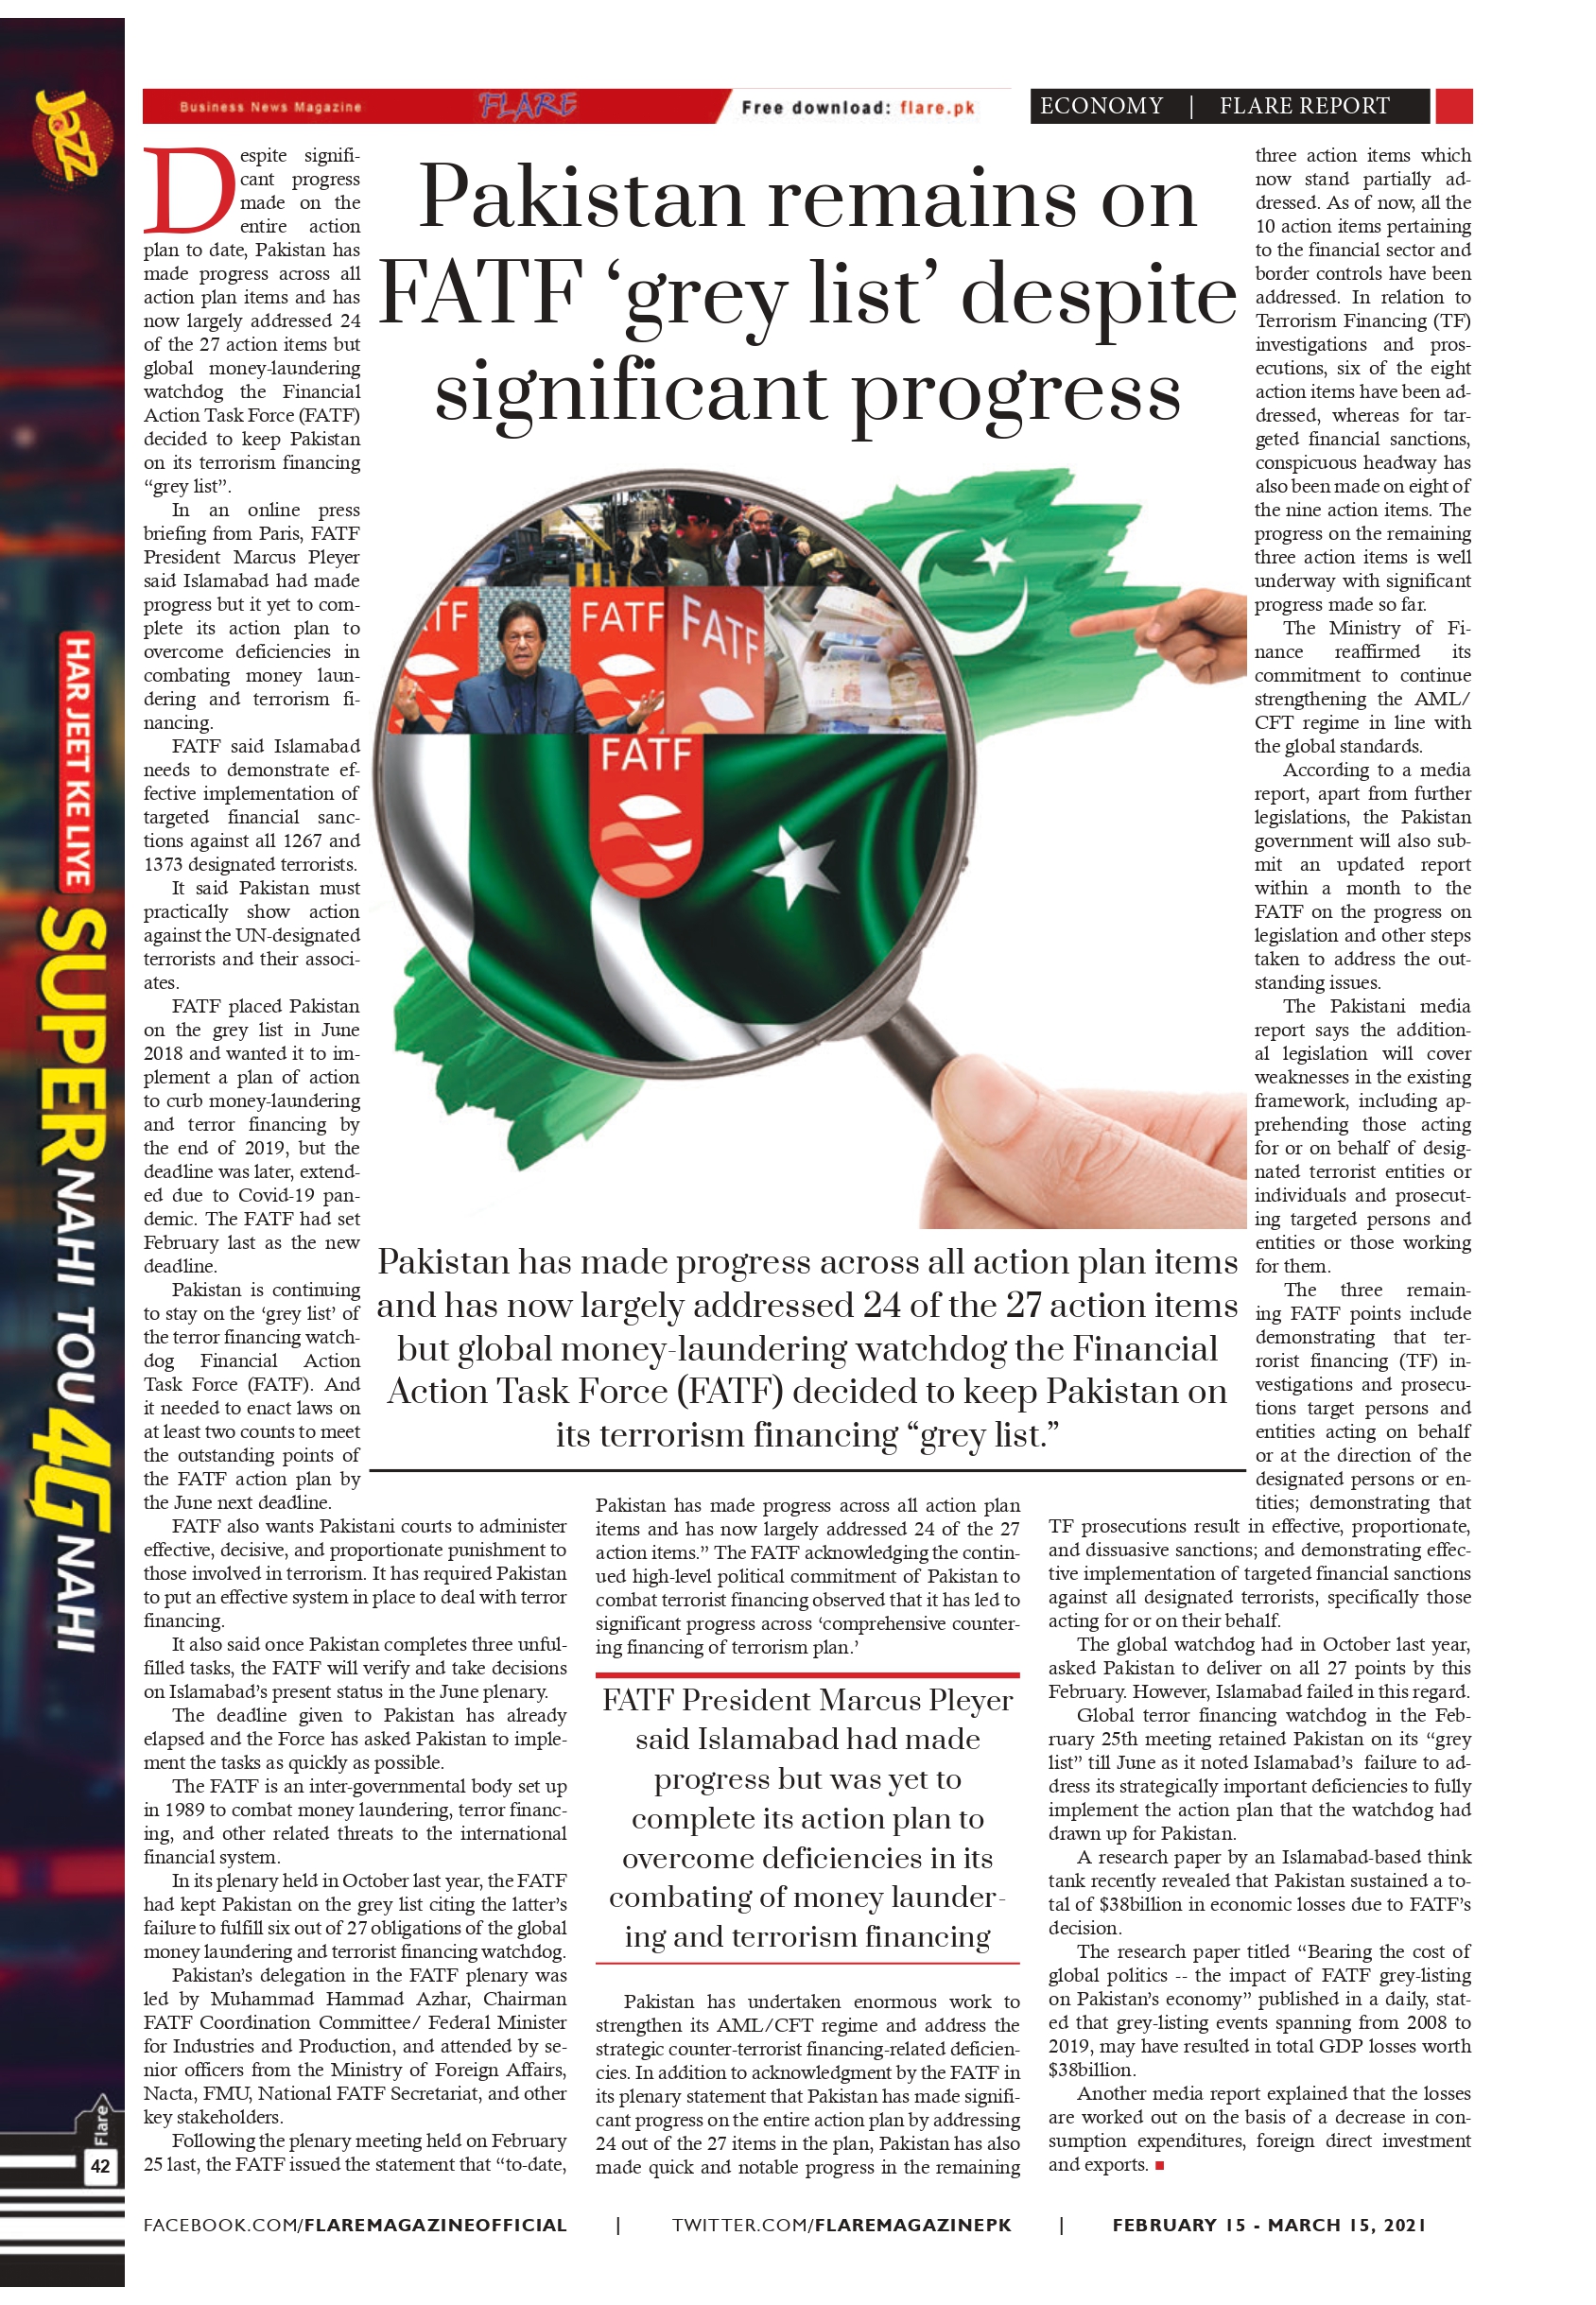 Pakistan remains on FATF ‘grey list’ despite significant progress